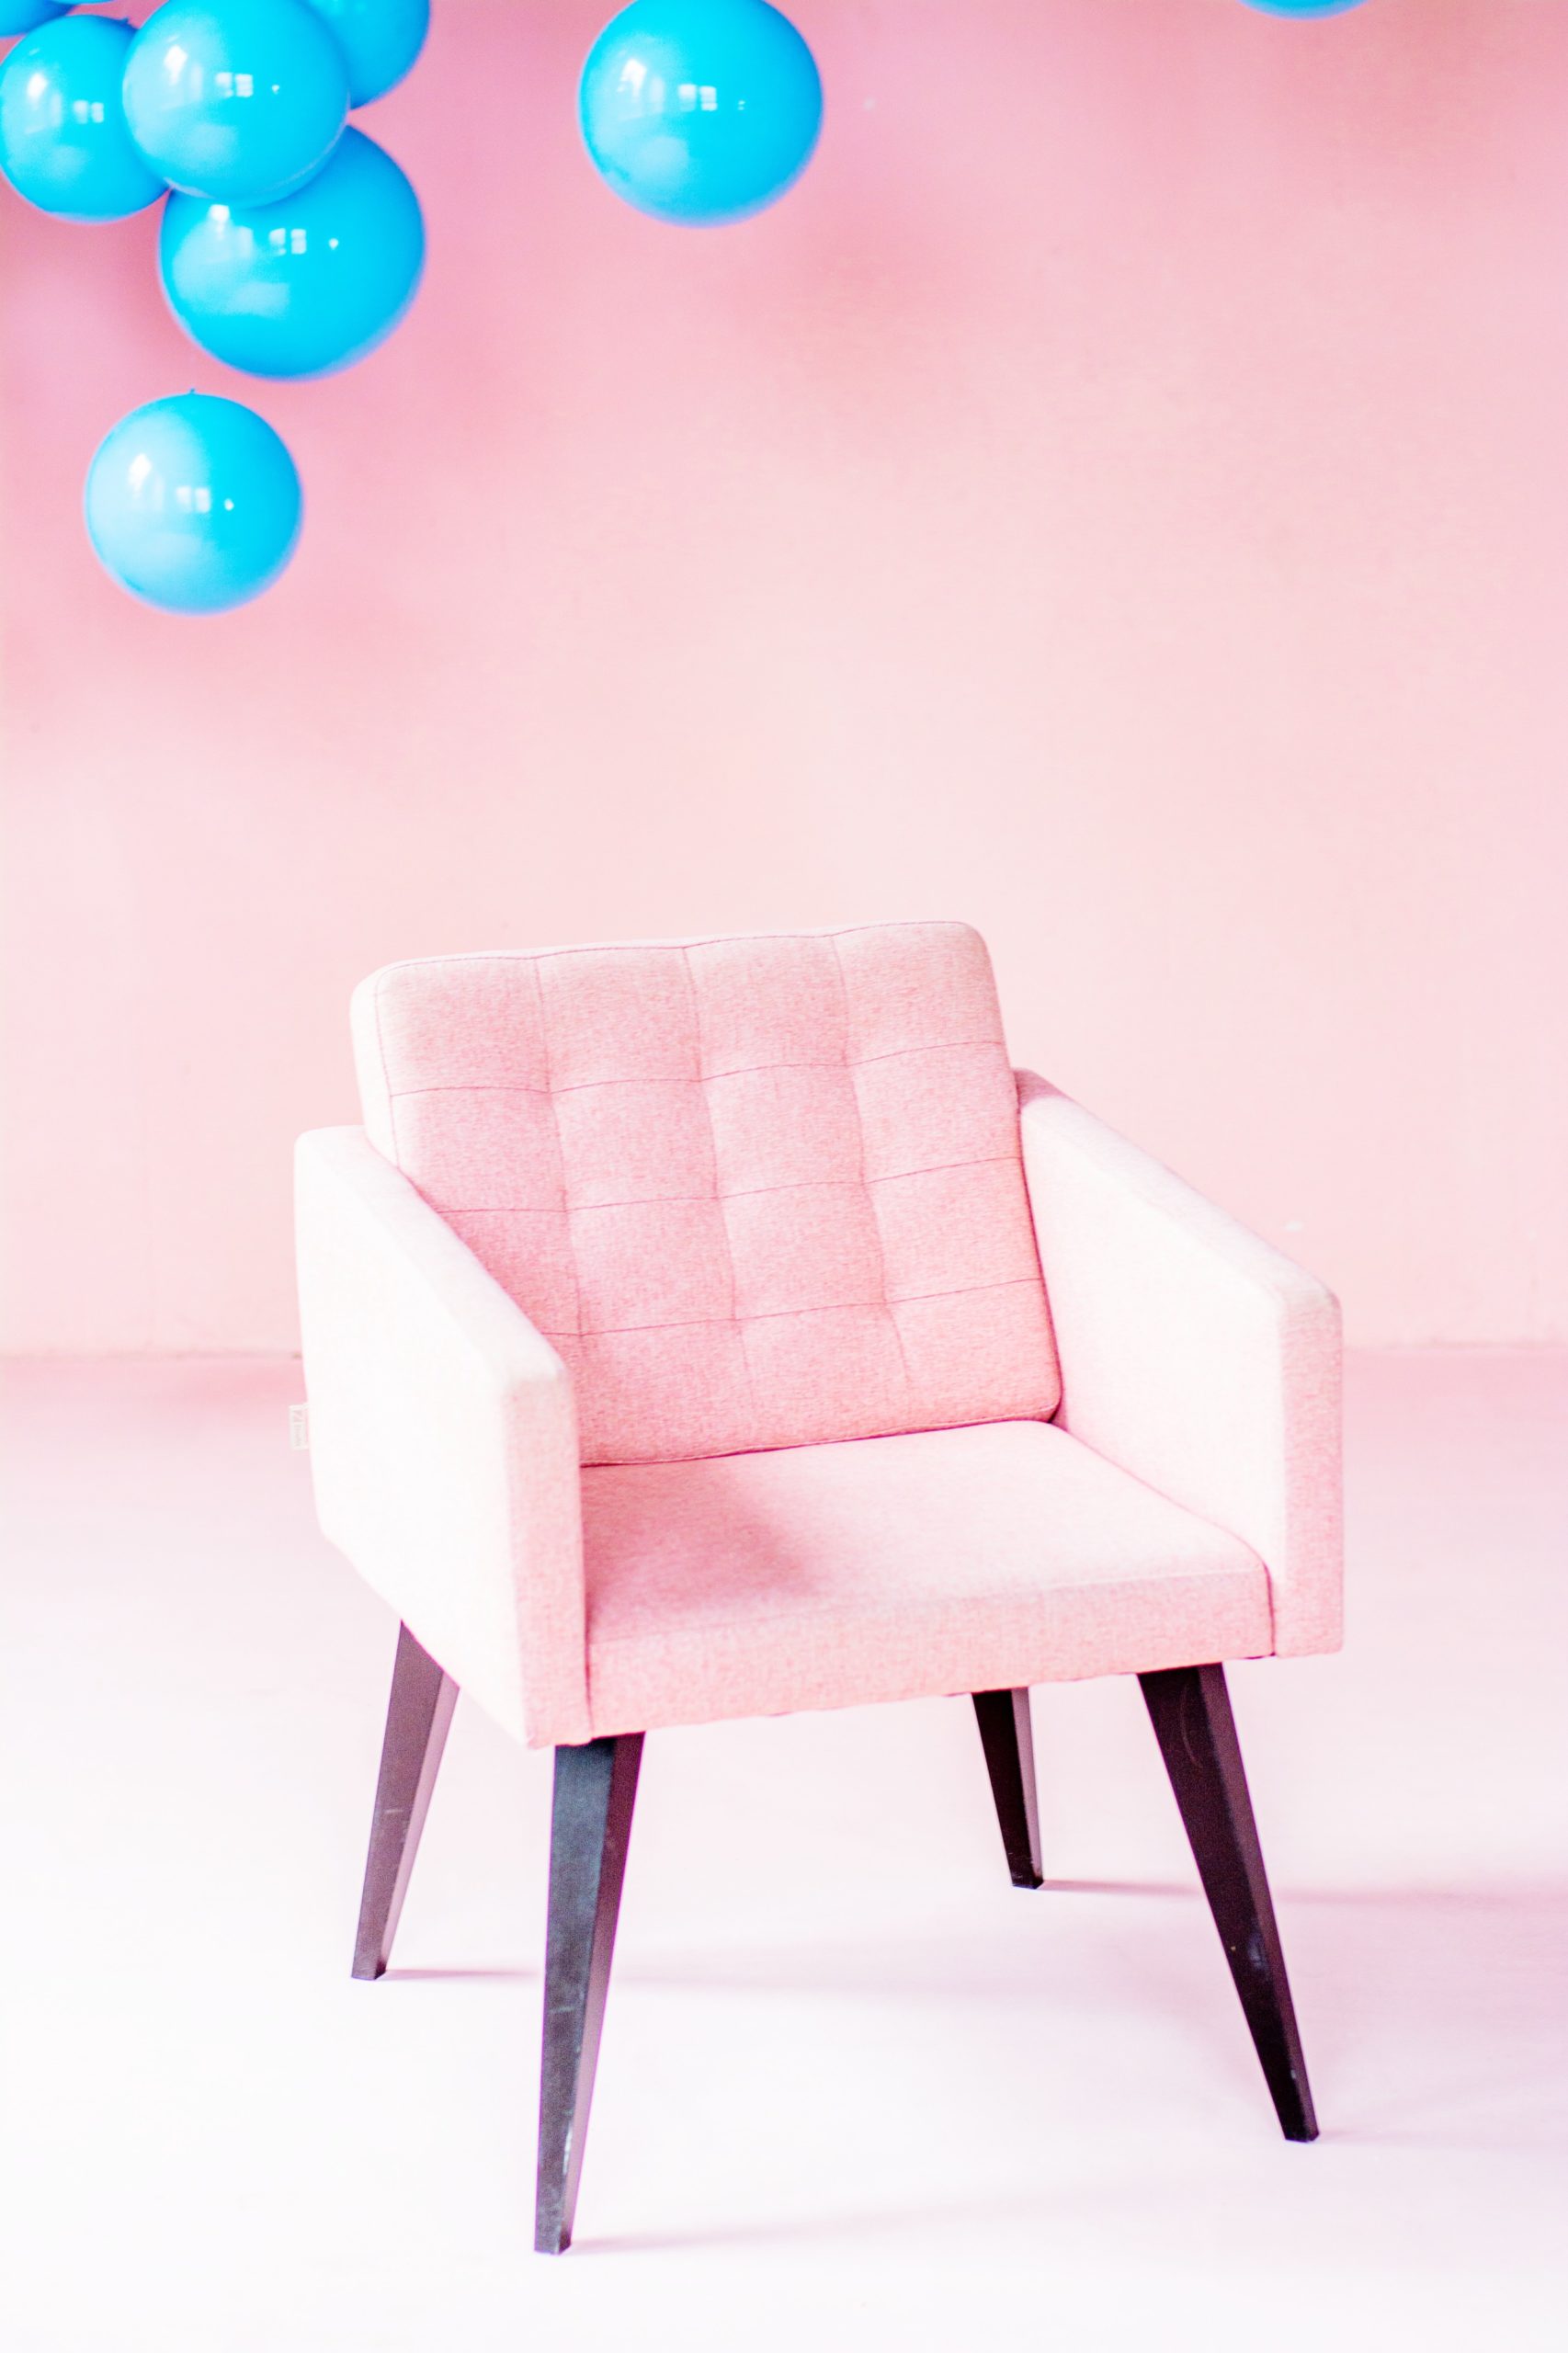 <img src="pink.jpg" alt="pink comfy desk chair"/> 